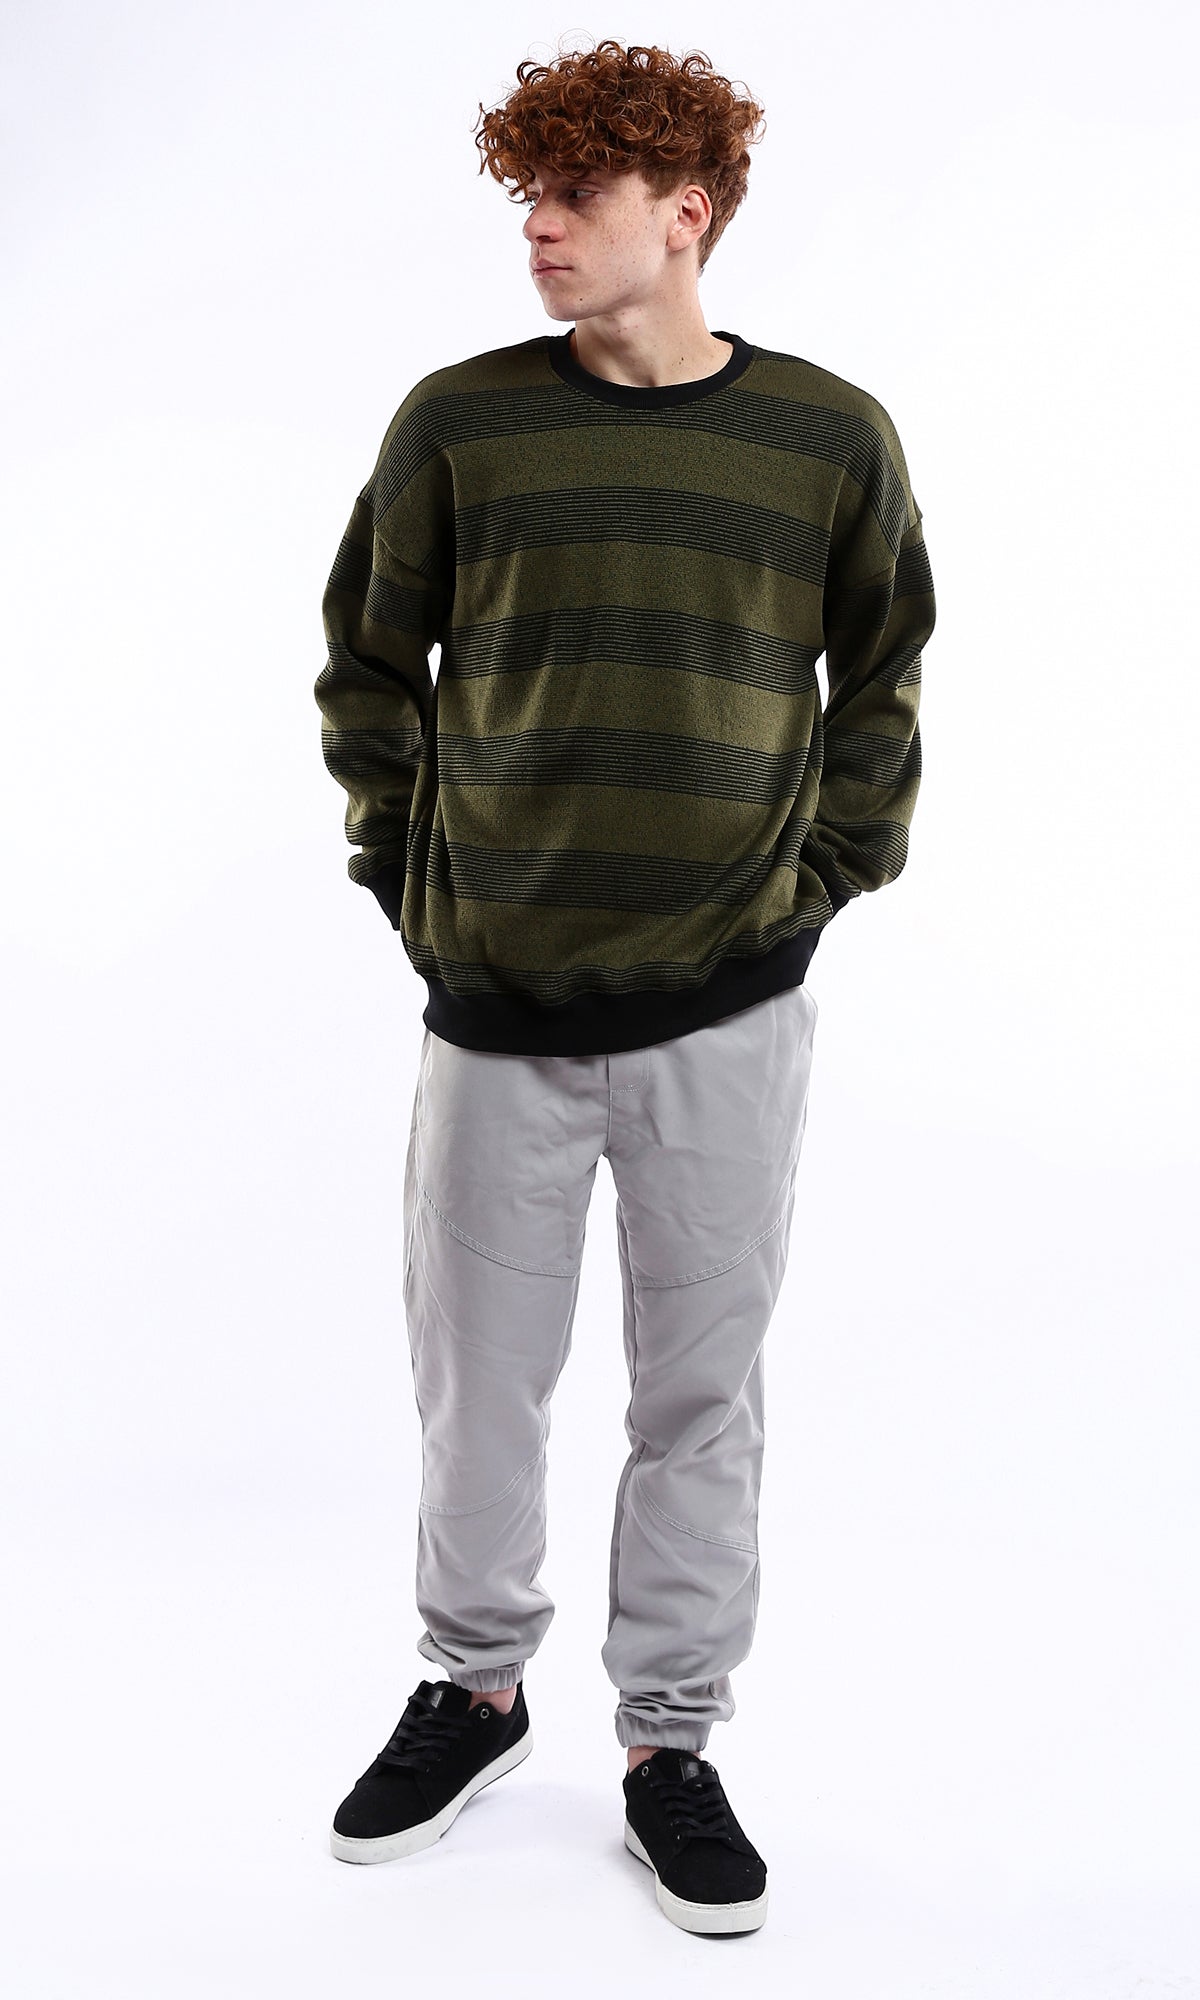 O177884 Black & Olive Striped Coziness Slip On Sweatshirt